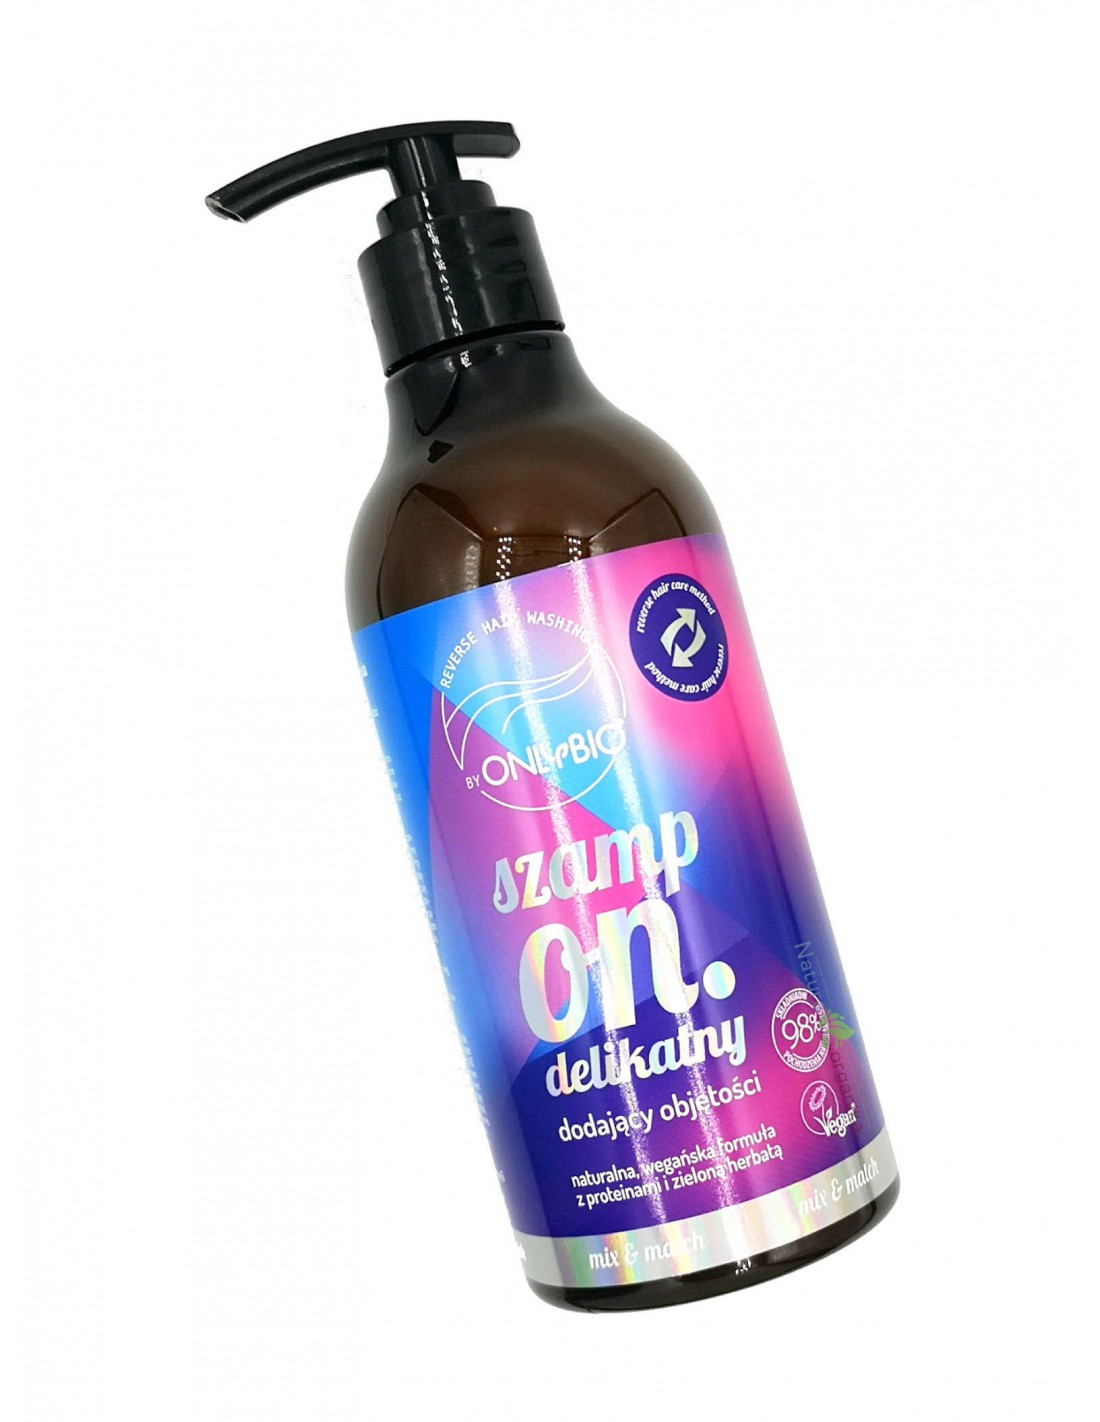 onlybio szampon